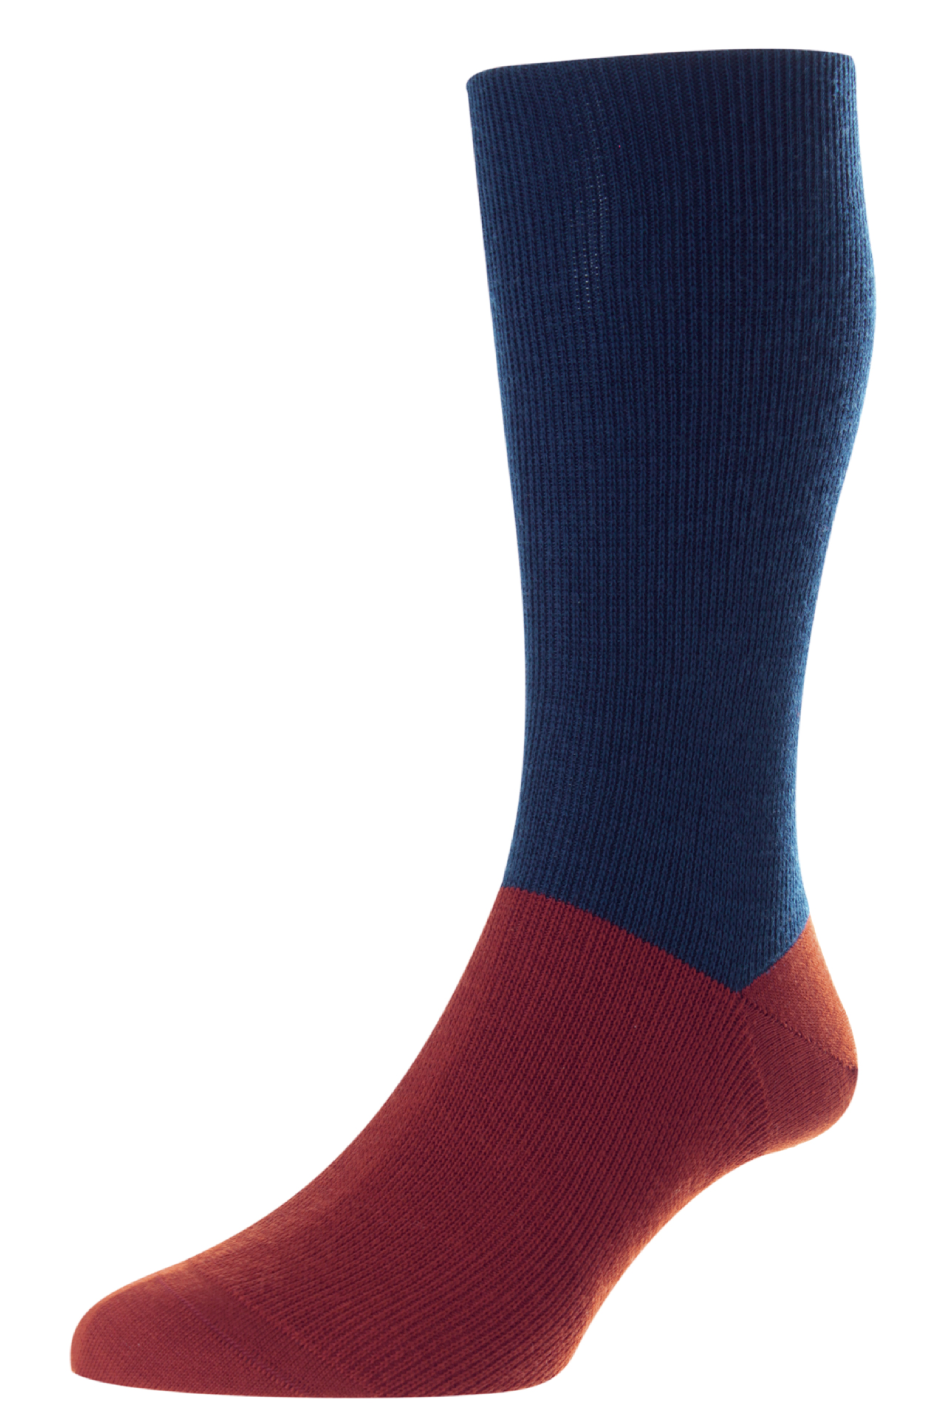 Pantherella Men's Edale Colour Block Sock